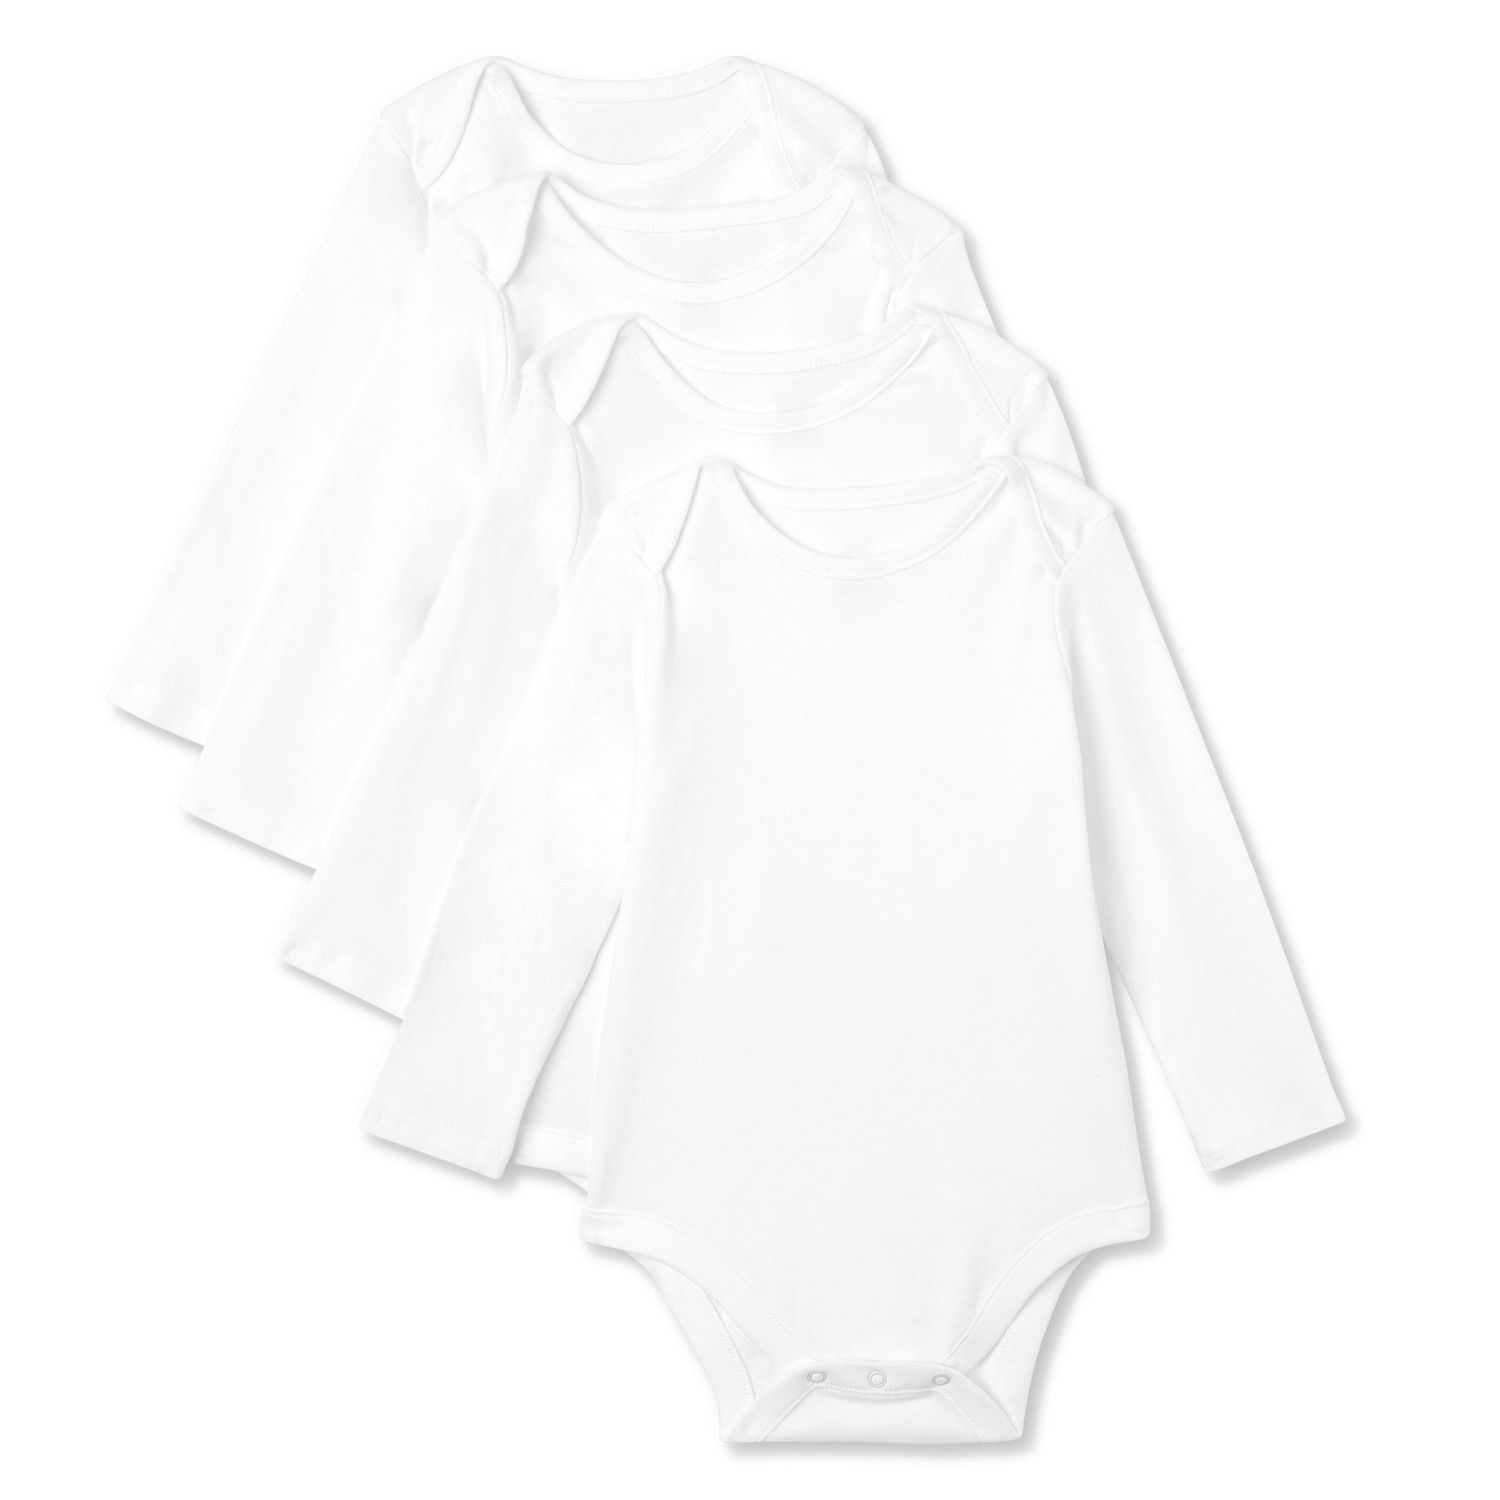 George Unisex Infants' 4 Pack Long Sleeved Bodysuits | Walmart Canada